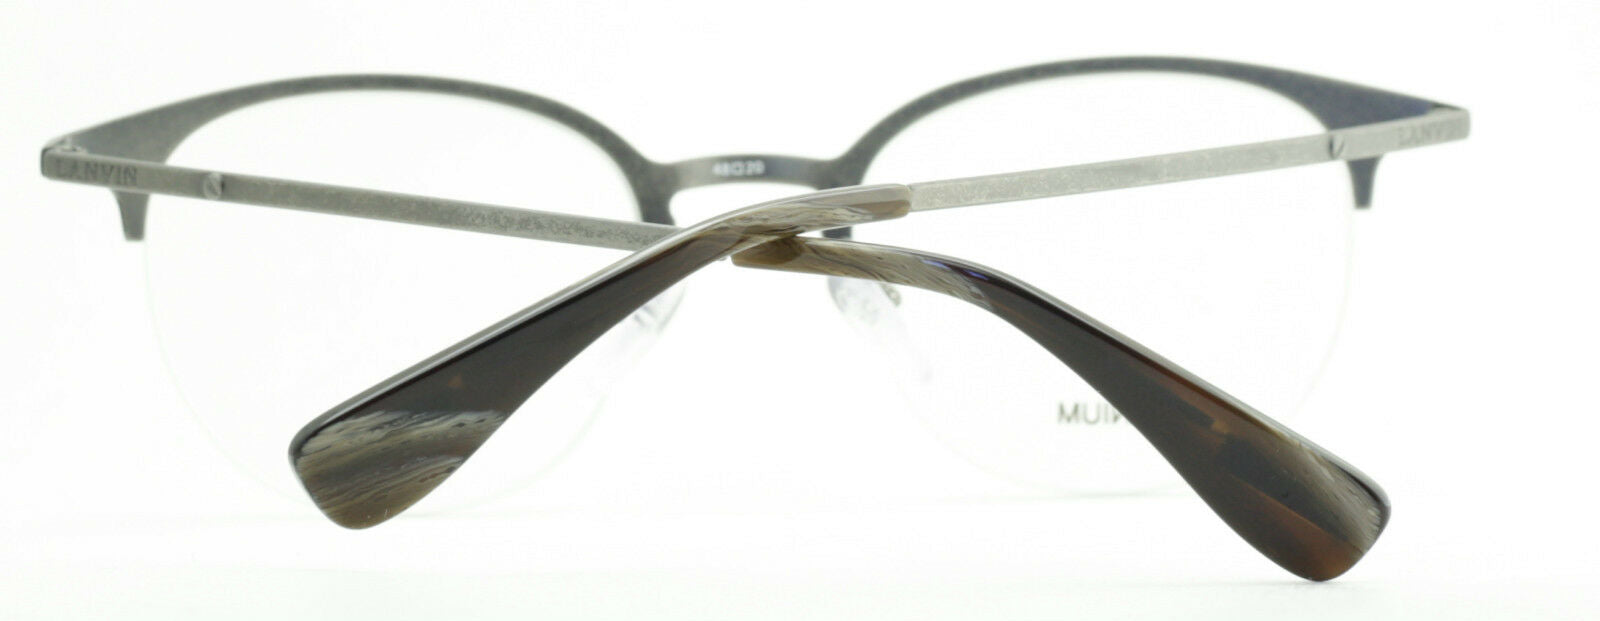 LANVIN VLN 029M COL. 05AB Eyewear RX Optical FRAMES NEW Glasses Eyeglasses -BNIB